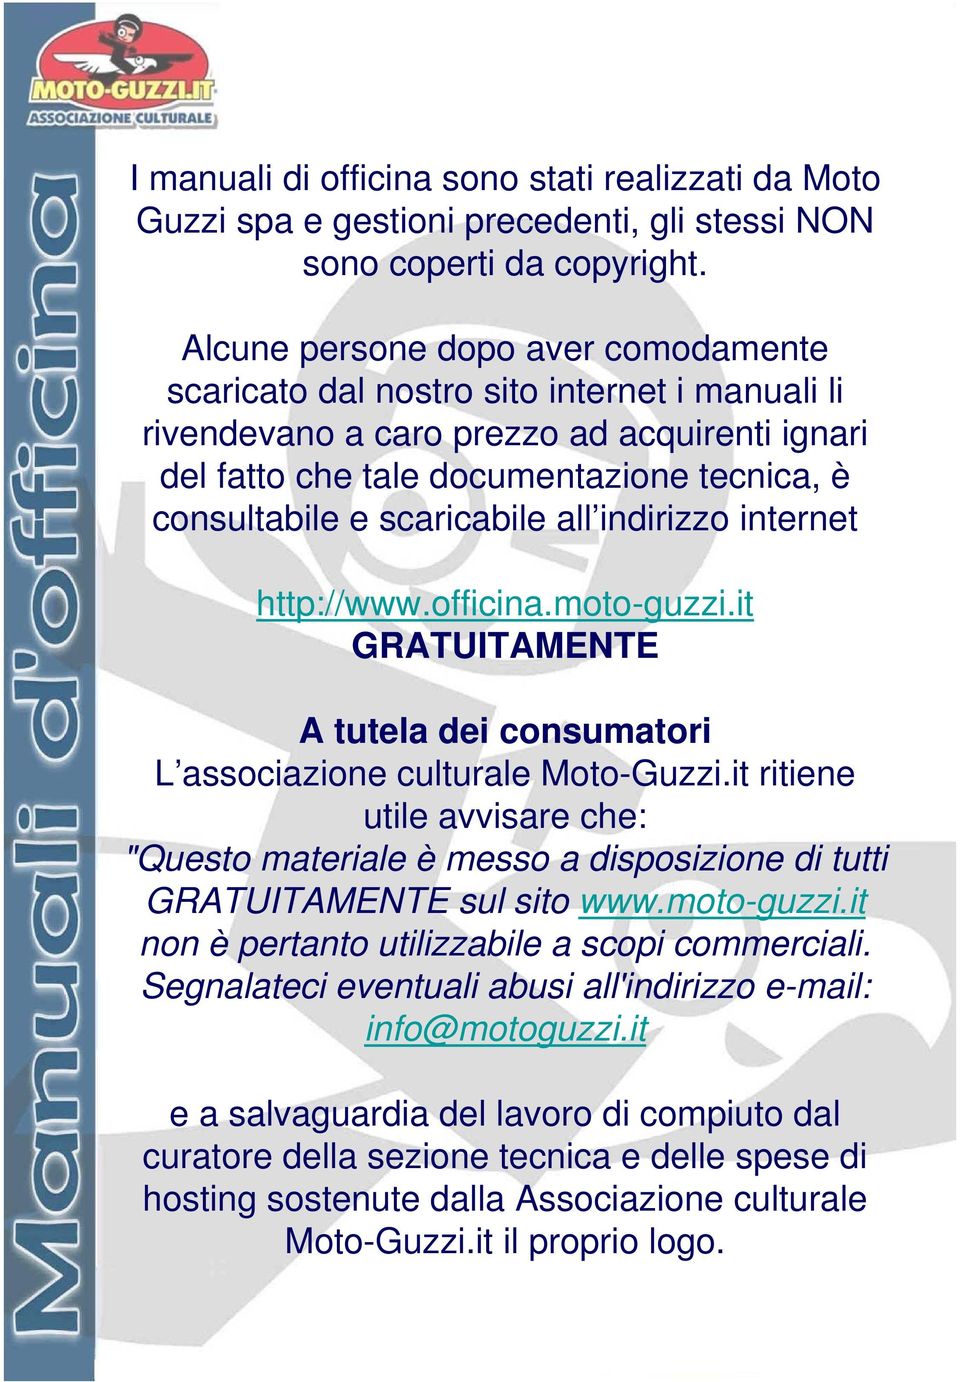 scaricabile all indirizzo internet http://www.officina.moto-guzzi.it GRATUITAMENTE A tutela dei consumatori L associazione culturale Moto-Guzzi.